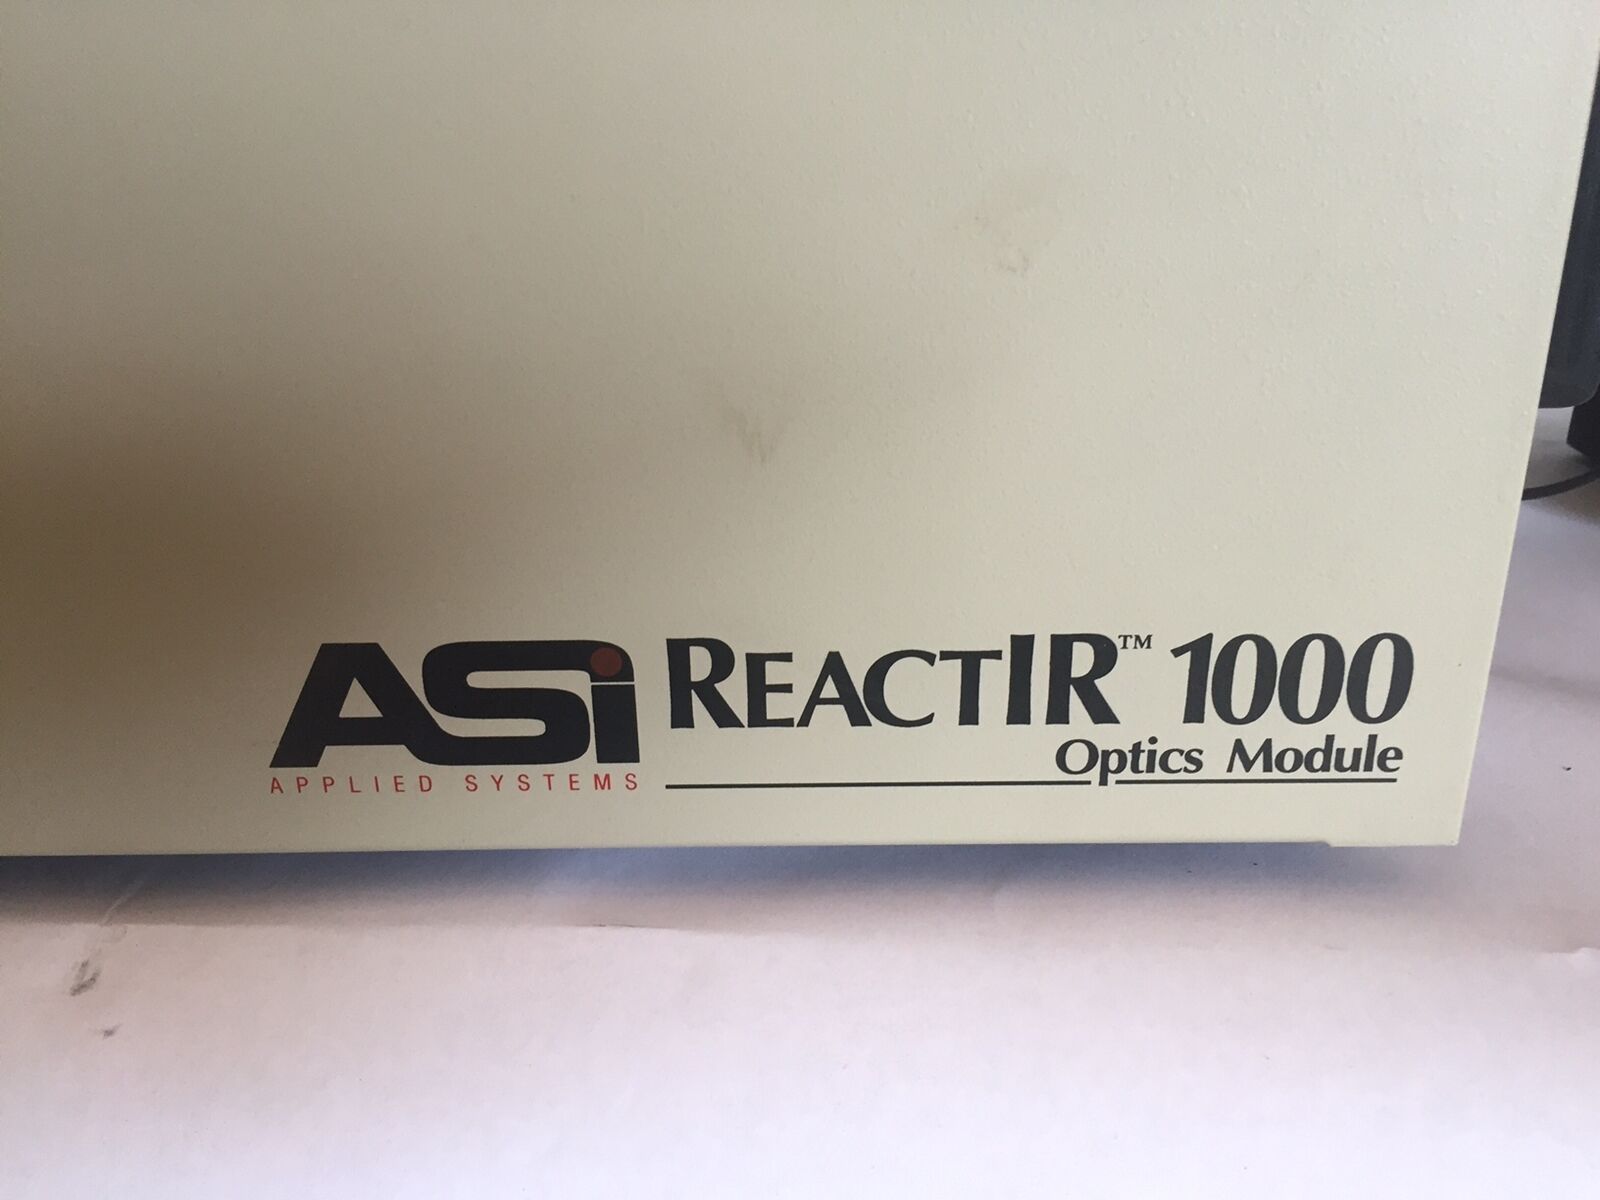 ASI ReactIR 1000 Optics Module 001-1002 w/ SICOMP Laser Probe Applied Systems